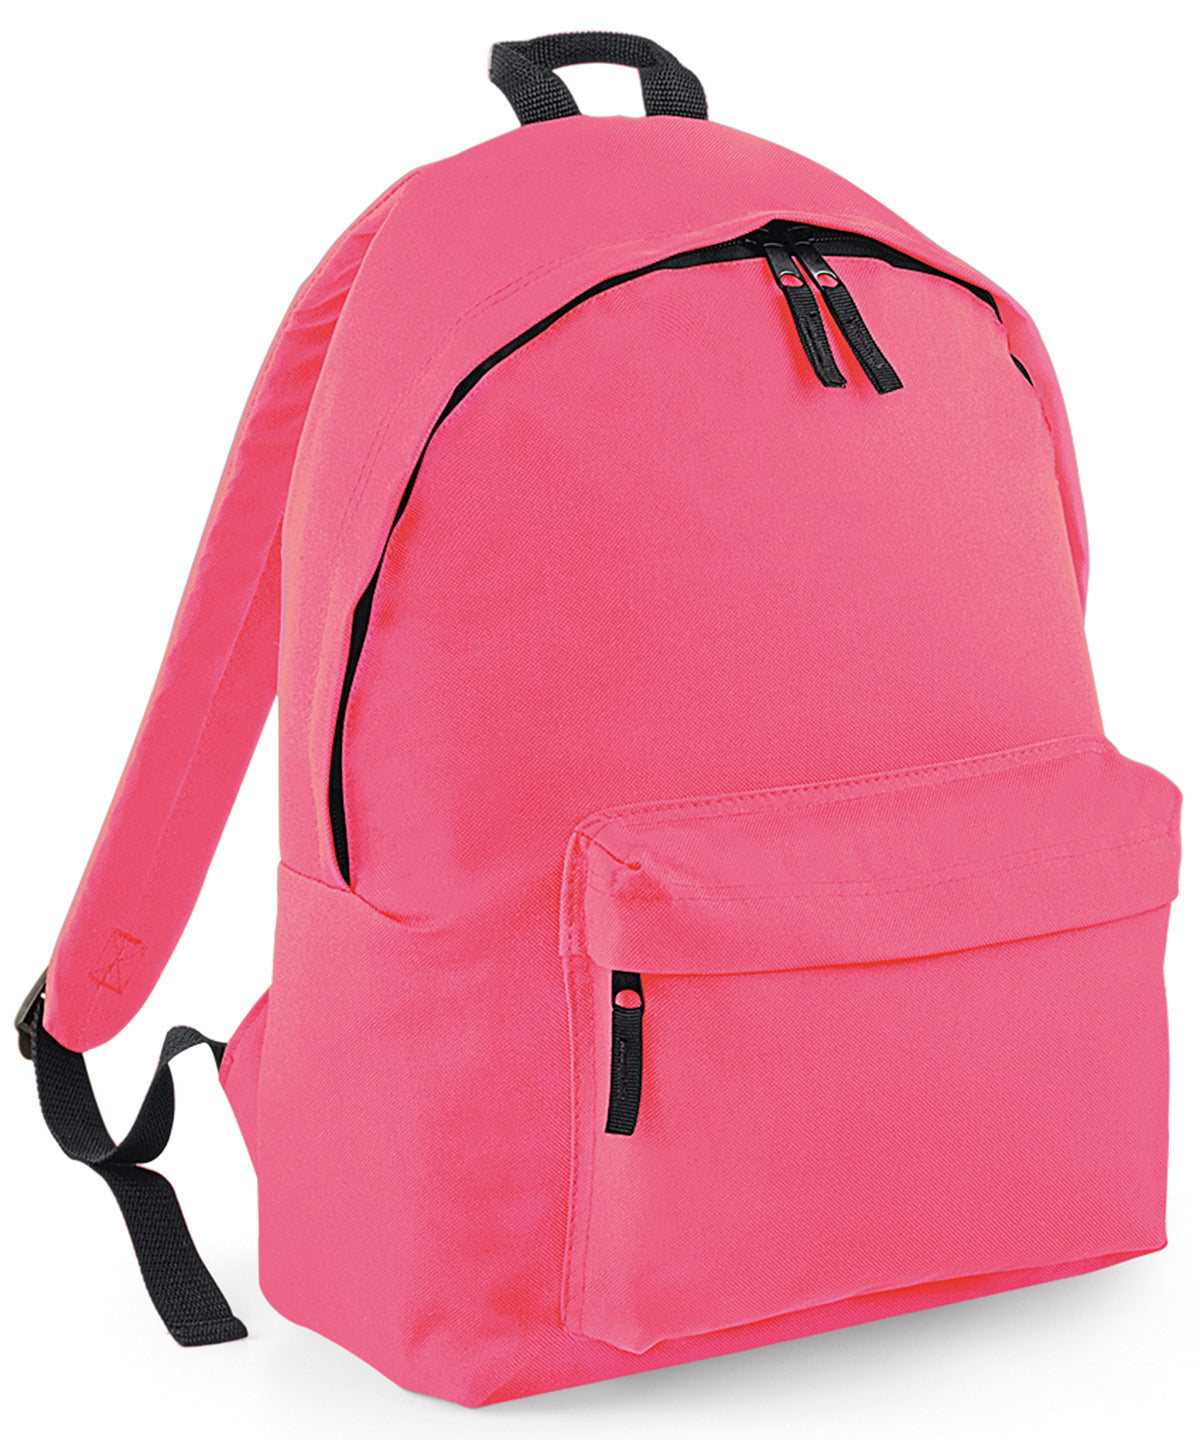 Personalised Bags - Bright Pink Bagbase Original fashion backpack